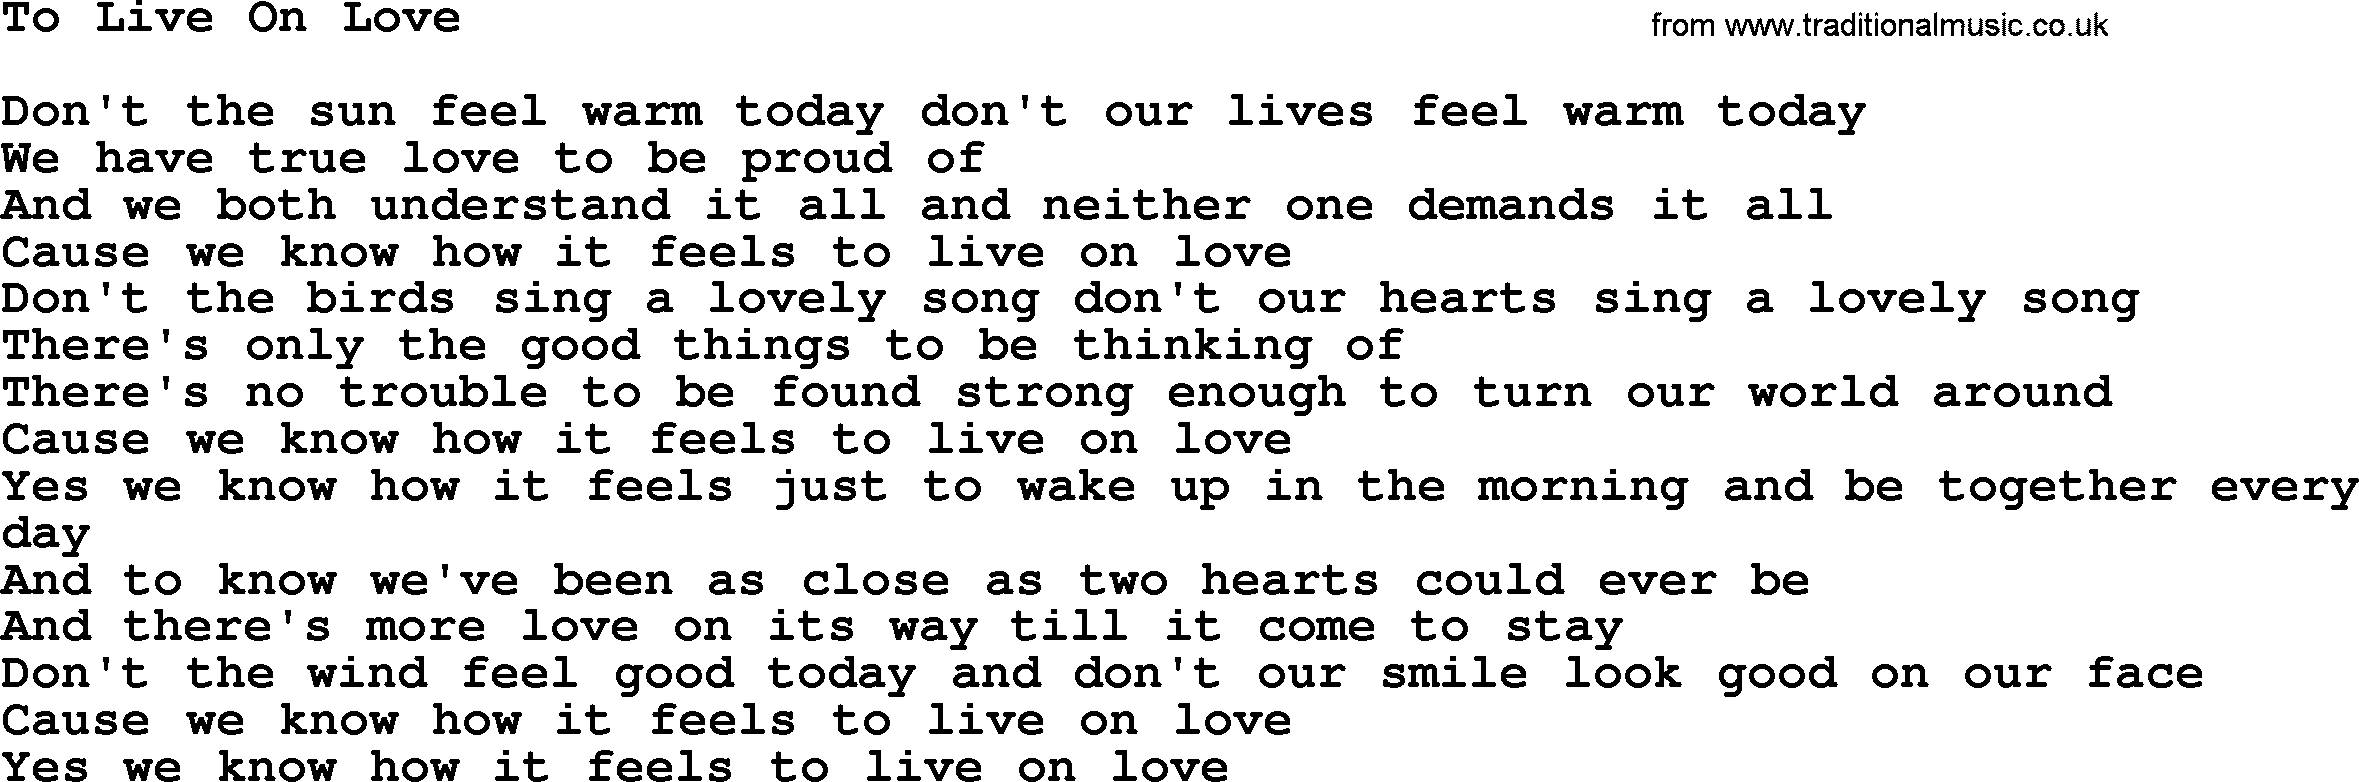 George Jones song: To Live On Love, lyrics